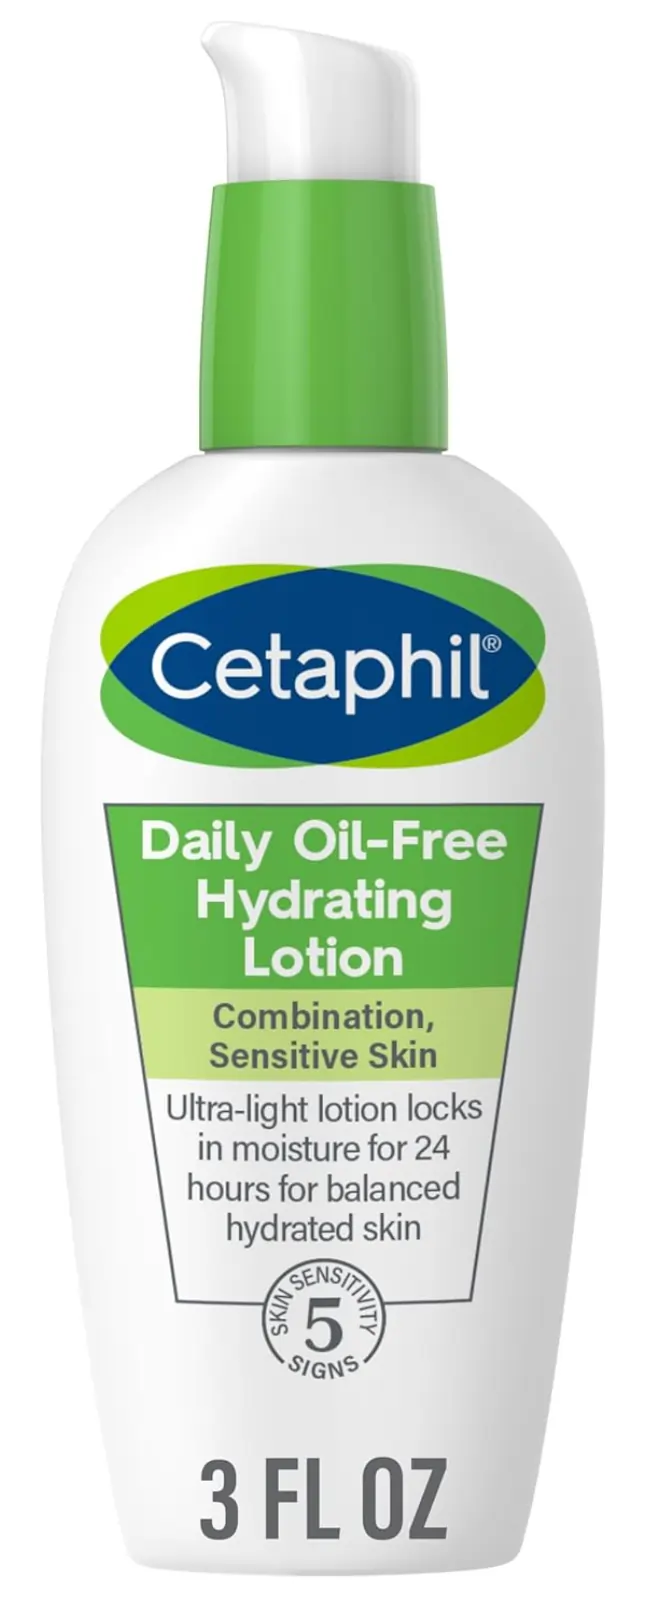 FEMMENORDIC's choice in the Cetaphil vs Vanicream comparison, Cetaphil Daily Oil-Free Hydrating Lotion